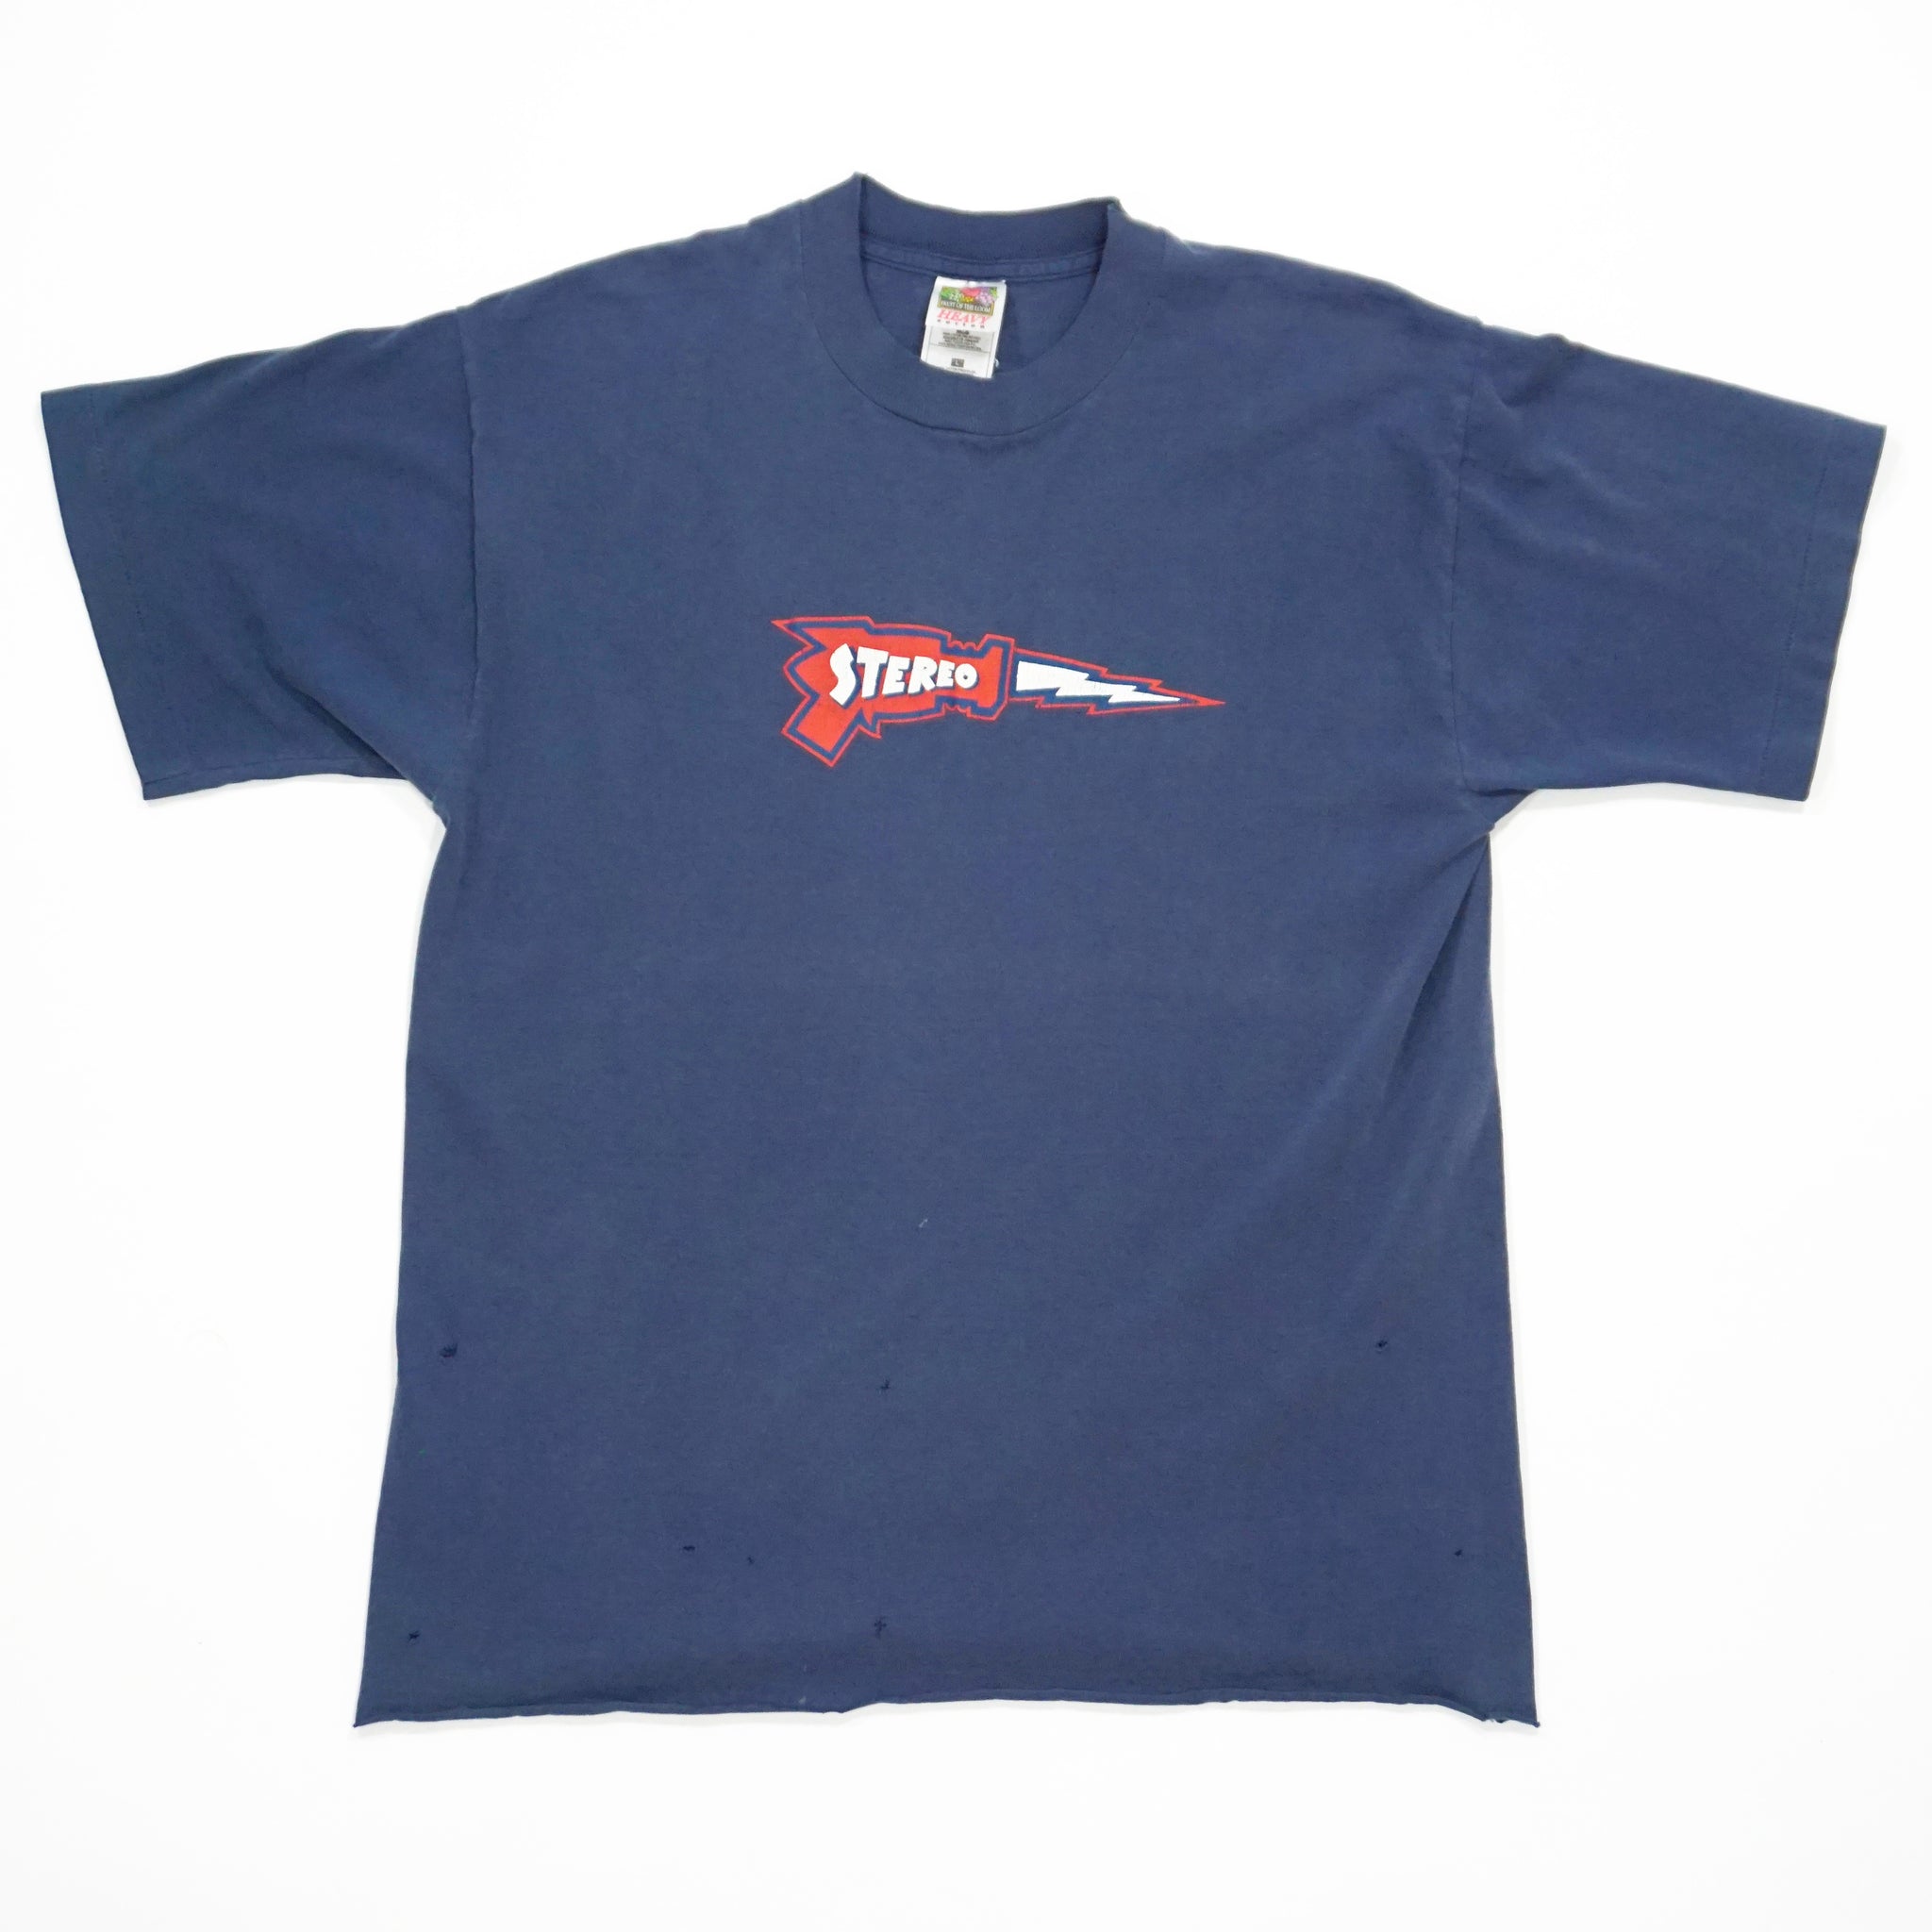 Stereo Skateboards - Ray Gun Shirt (L)